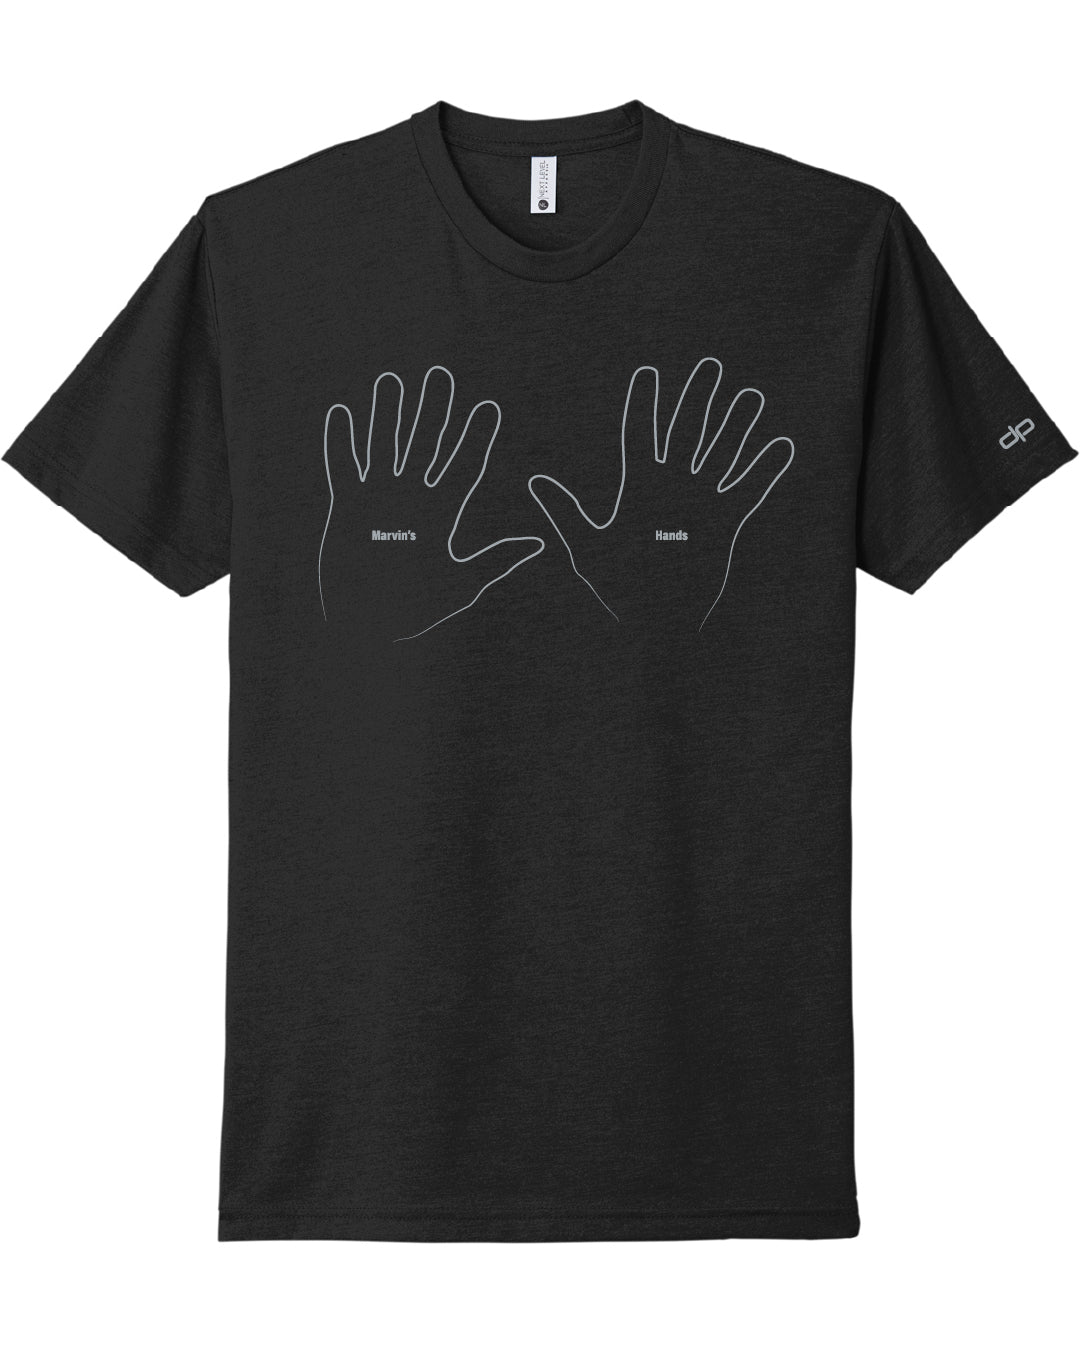 Marvin's Hands T-Shirt